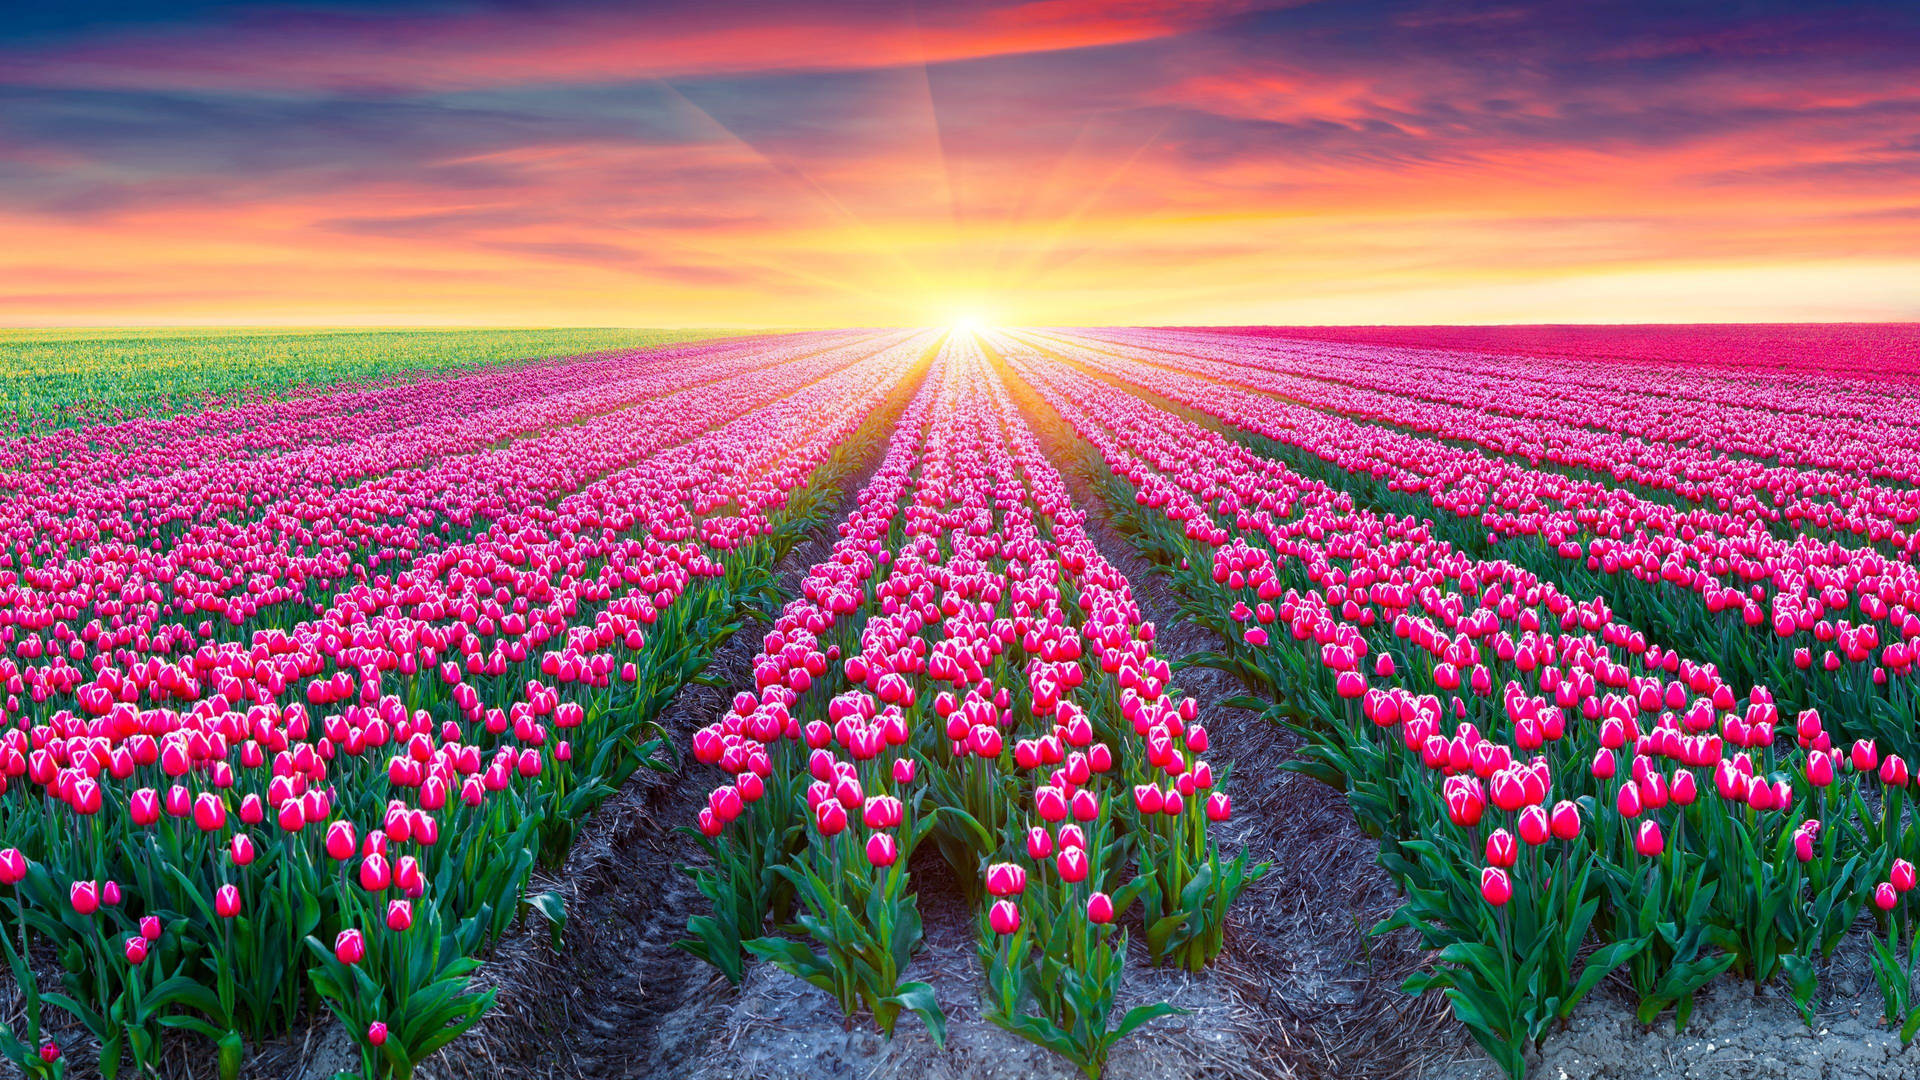 Share more than 79 pink flower field wallpaper